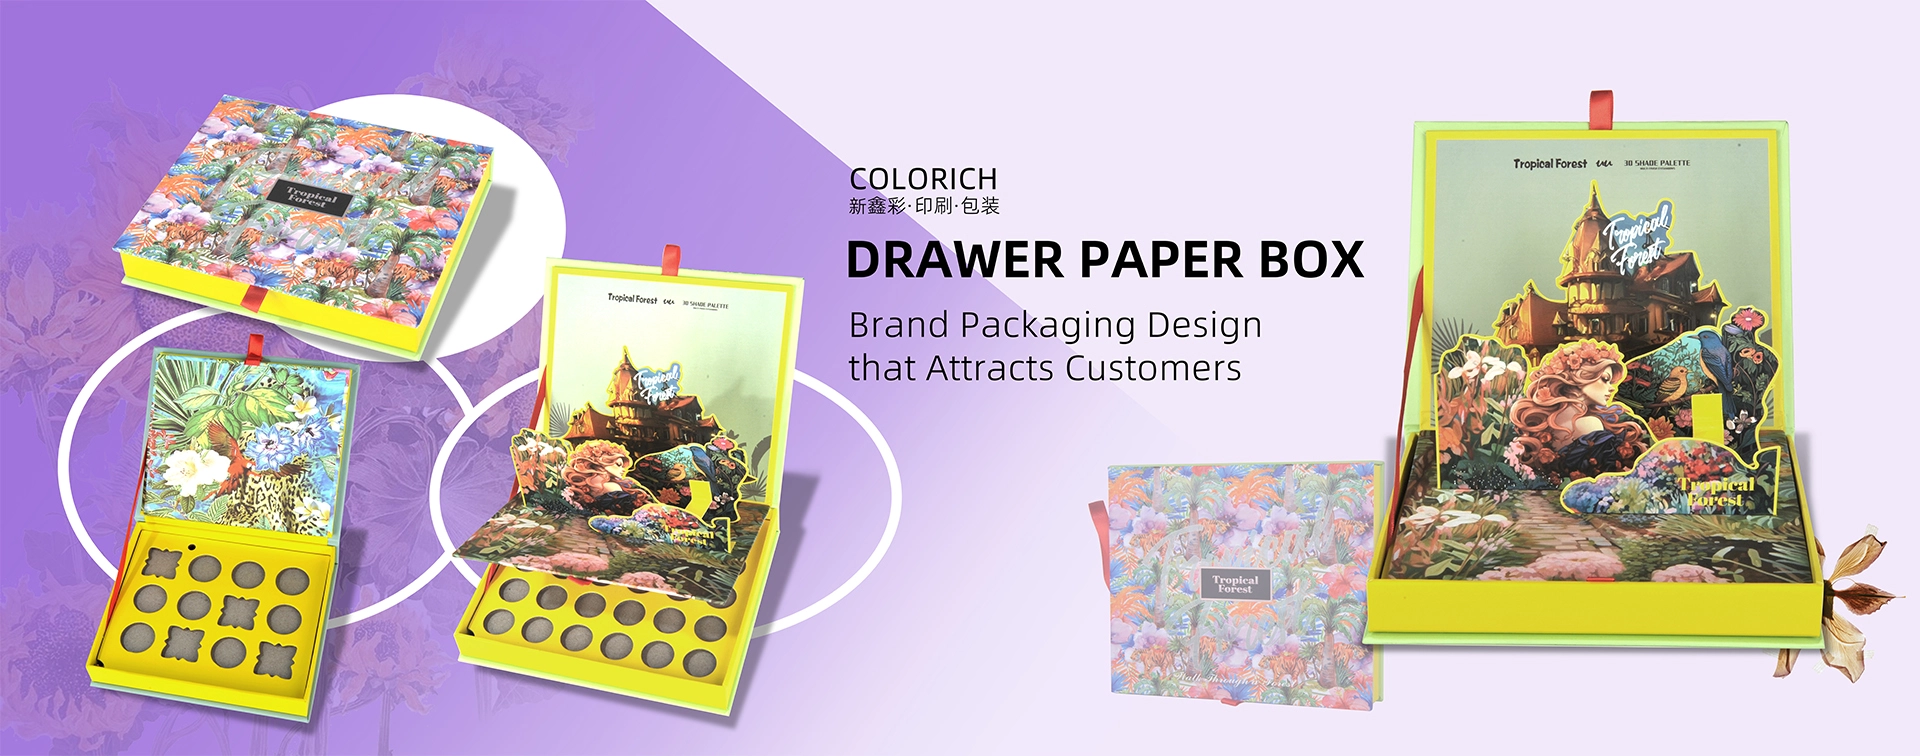 Drawer Paper Box